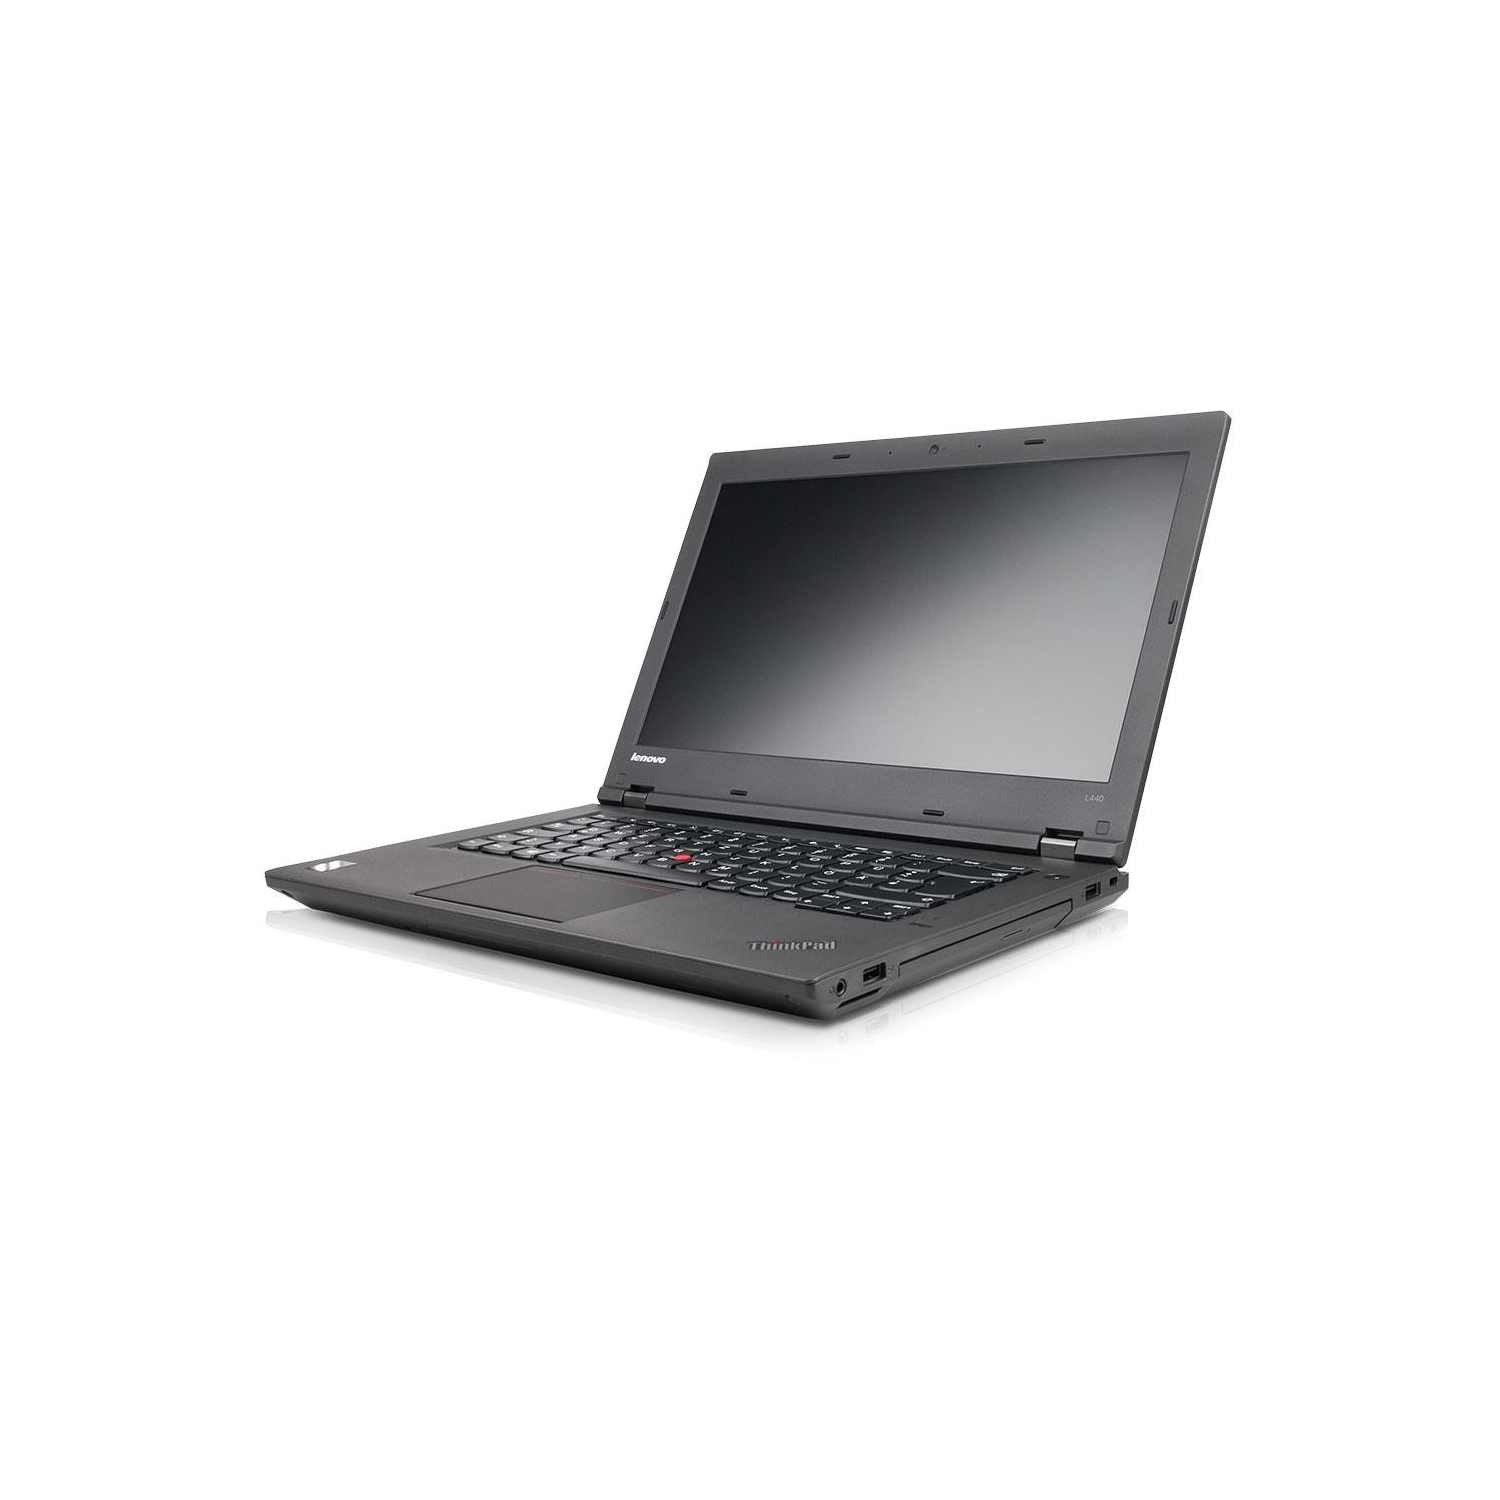 Refurbished (Good) - Lenovo ThinkPad L440 Core i5-4300M, 16GB RAM, 512GB SSD, 14.0"HD+(1600x900), Intel HD Graphics, WEBCAM, Bluetooth